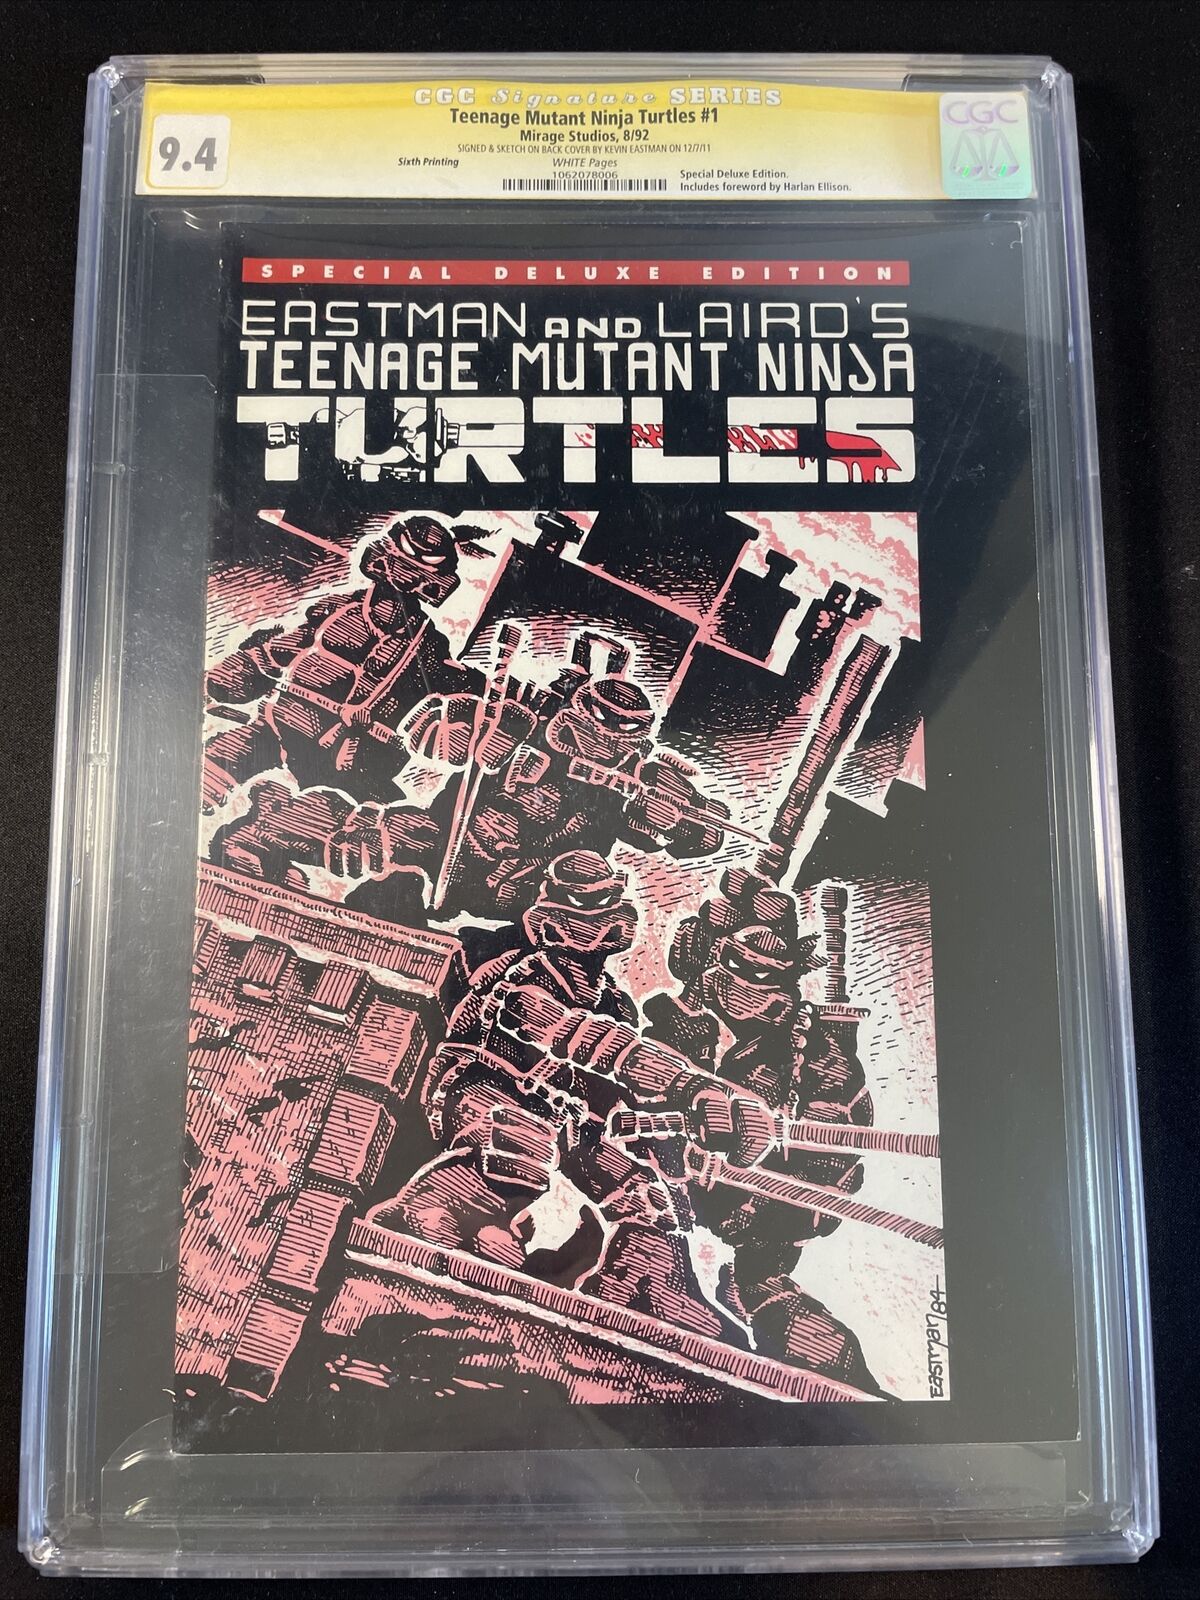 Teenage Mutant Ninja Turtles #1 CGC 9.4 SS 6th Print w/ HUGE Sketch back Cover